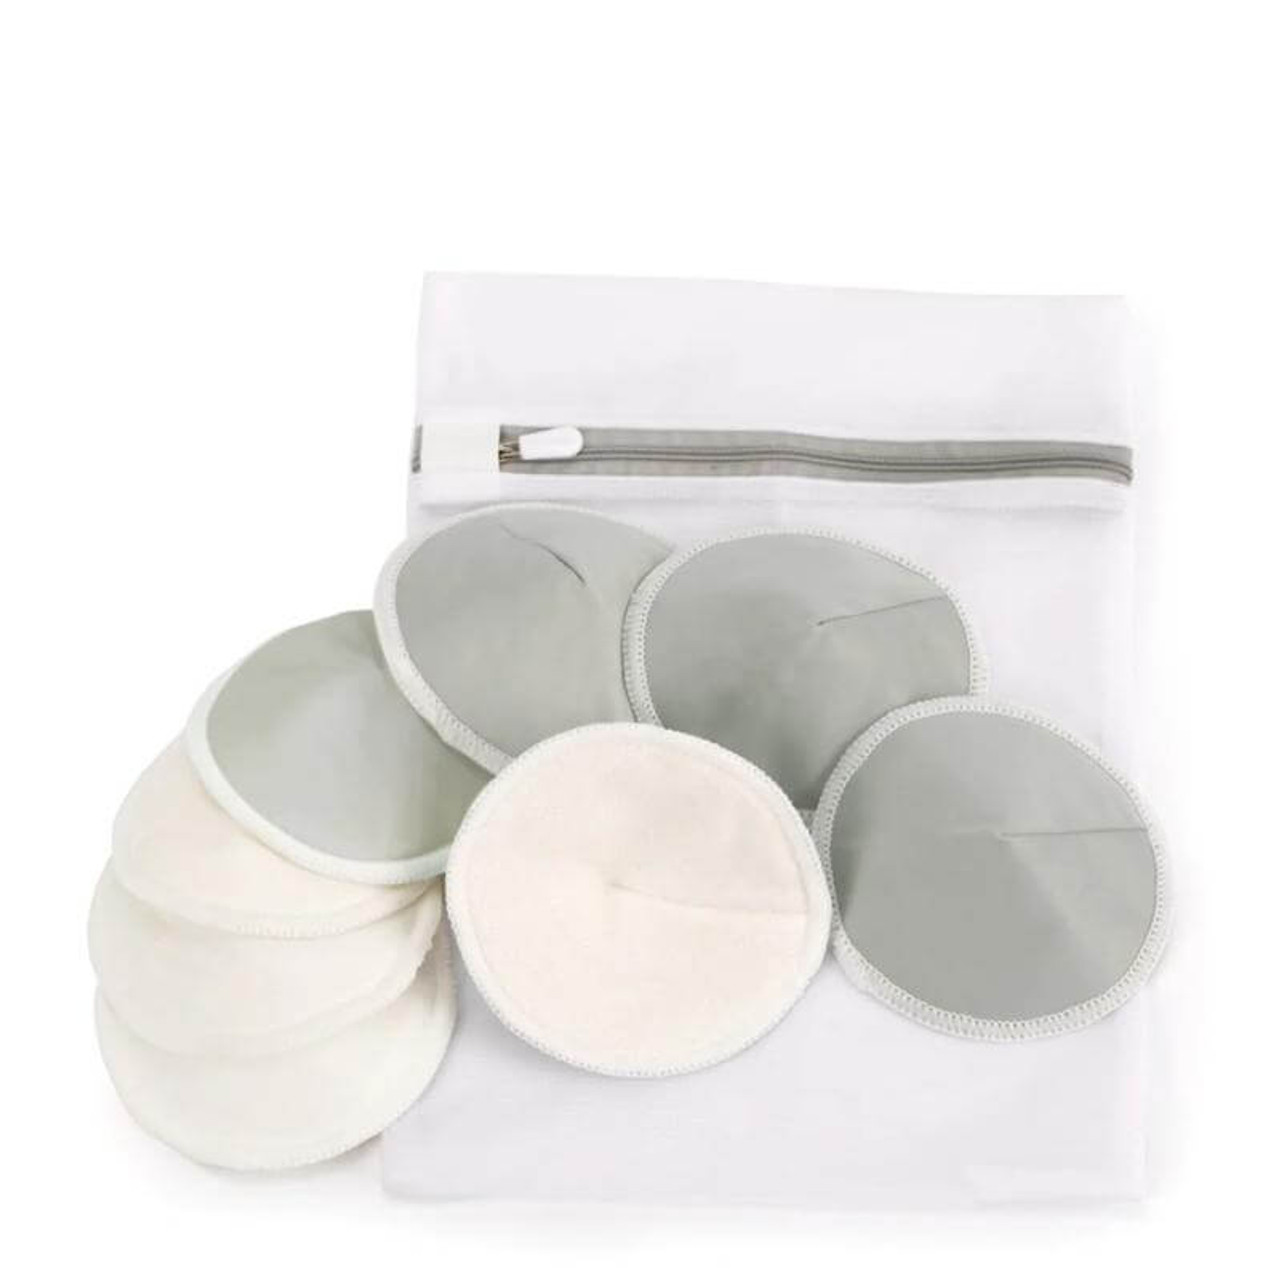 Hygeia Disposable Nursing pads size Medium 30ct